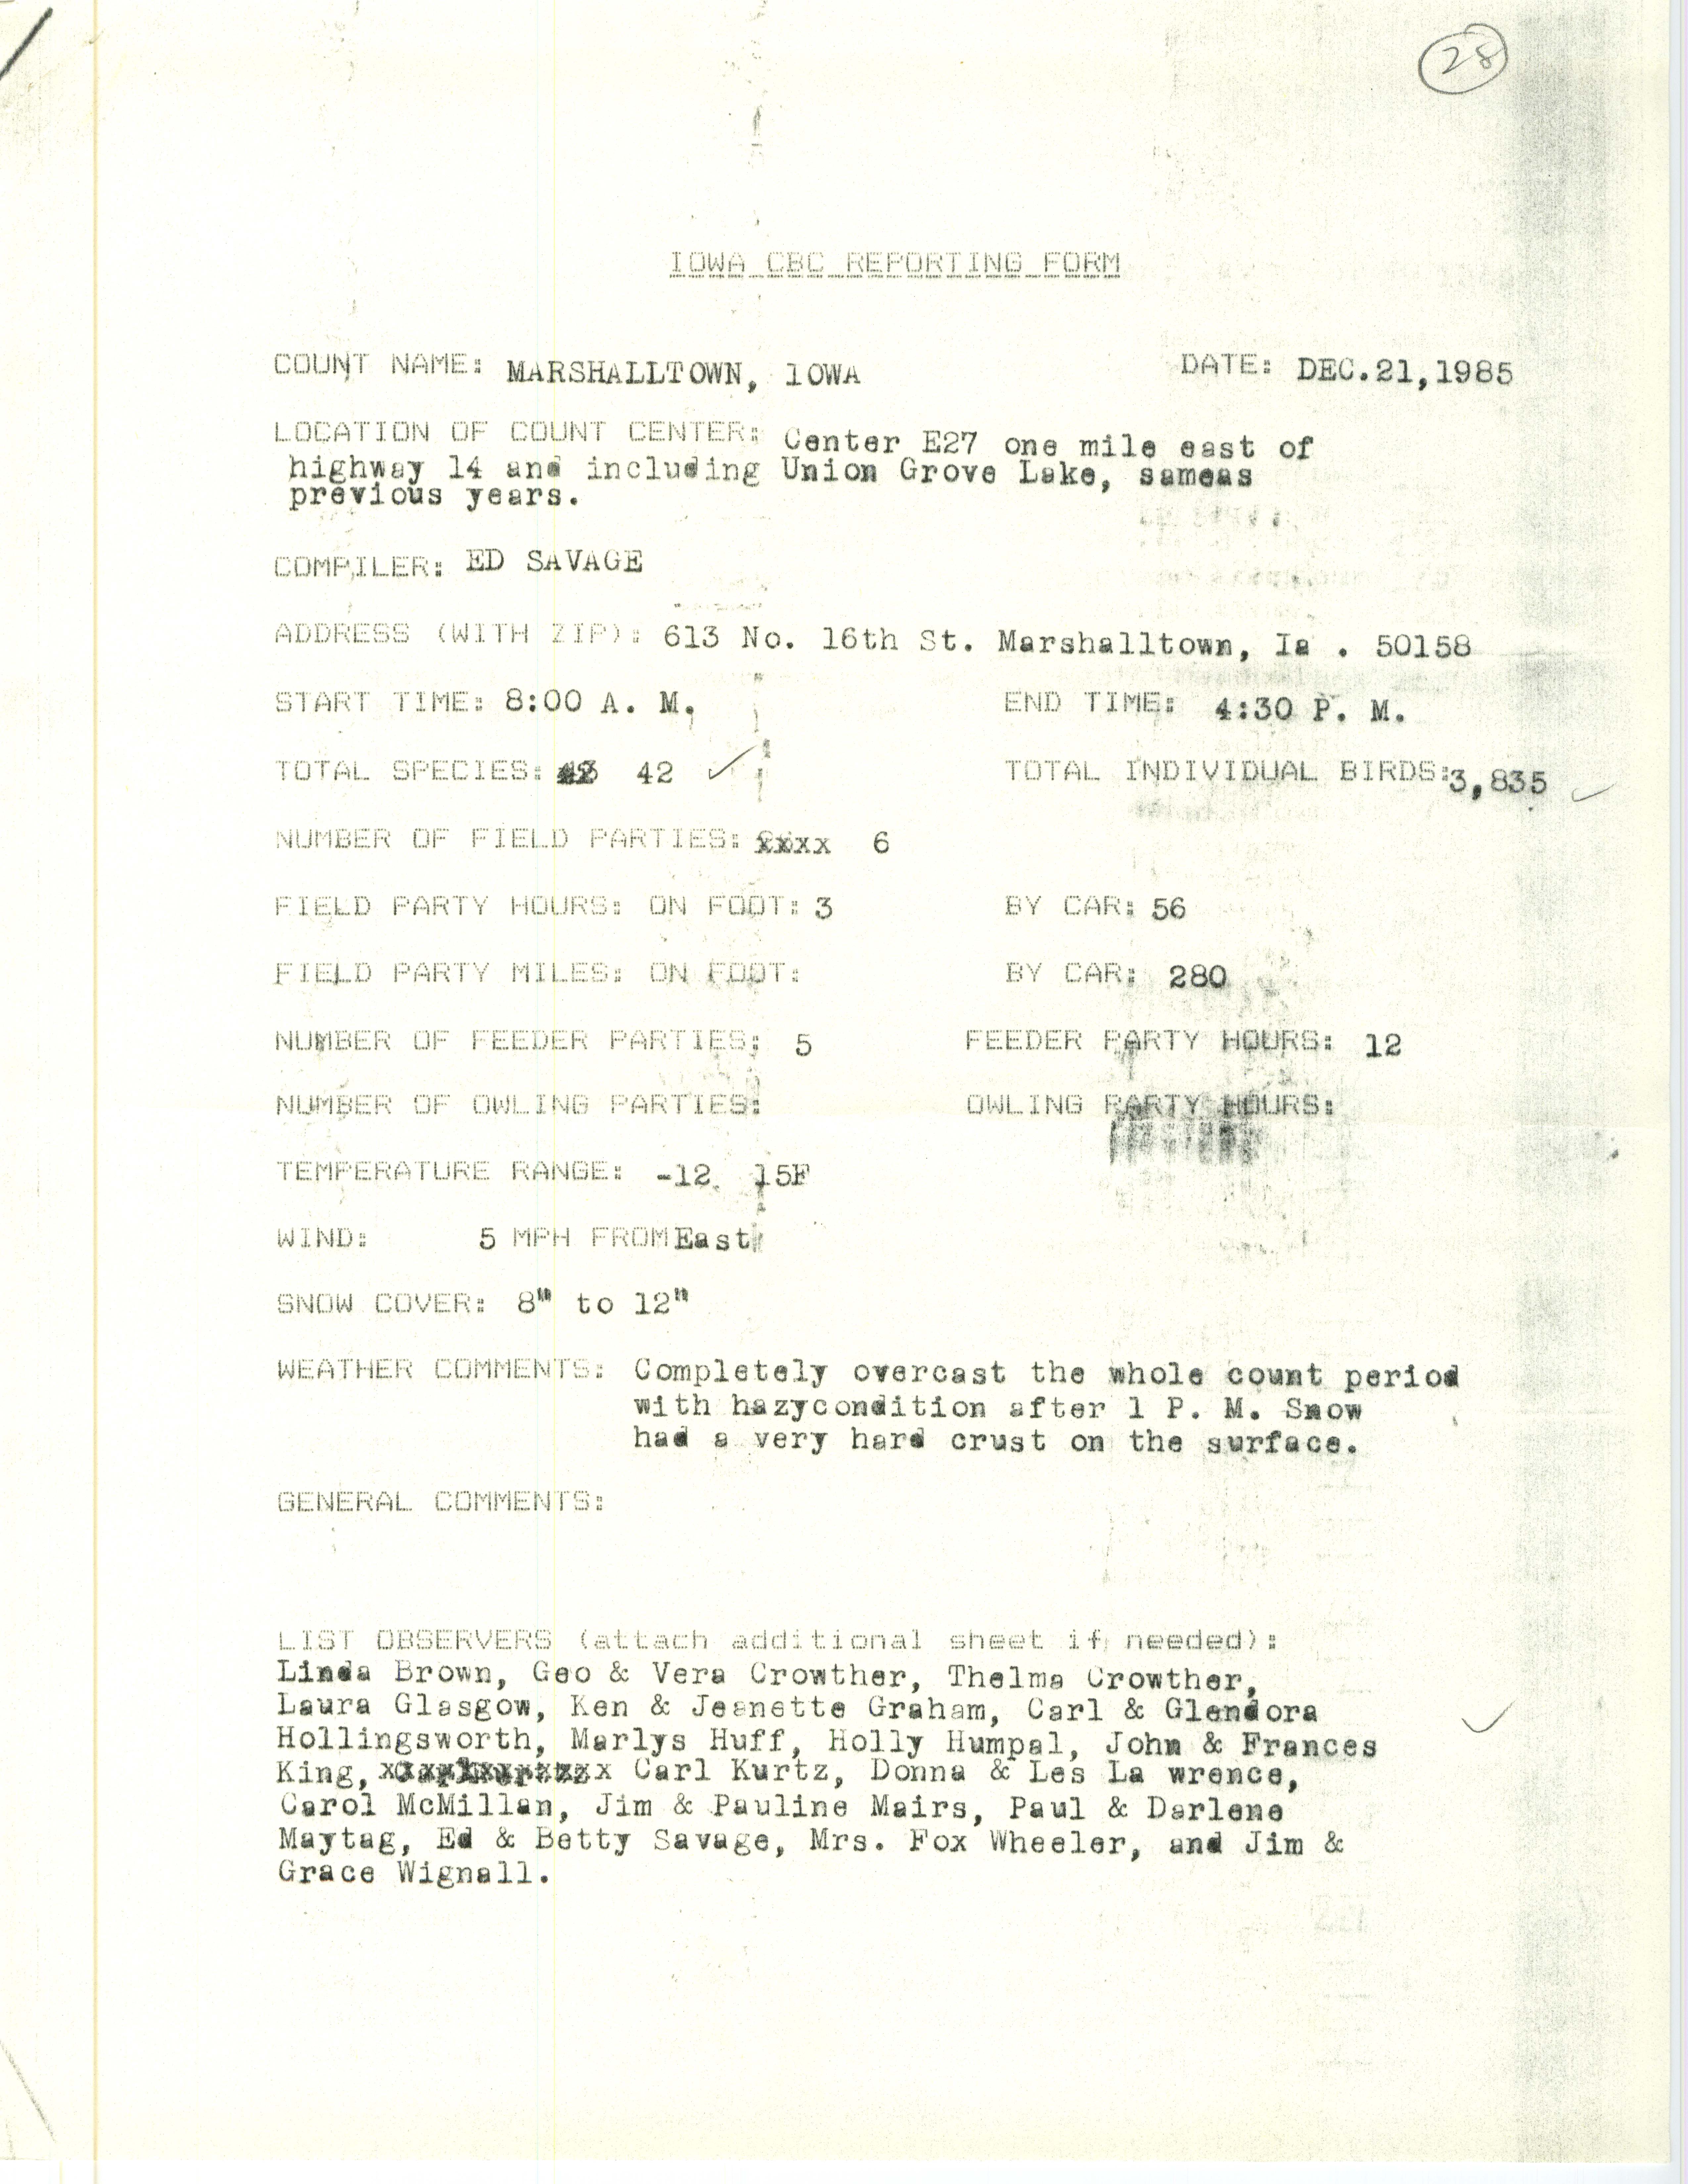 Iowa CBC reporting form, Marshalltown, December 21, 1985